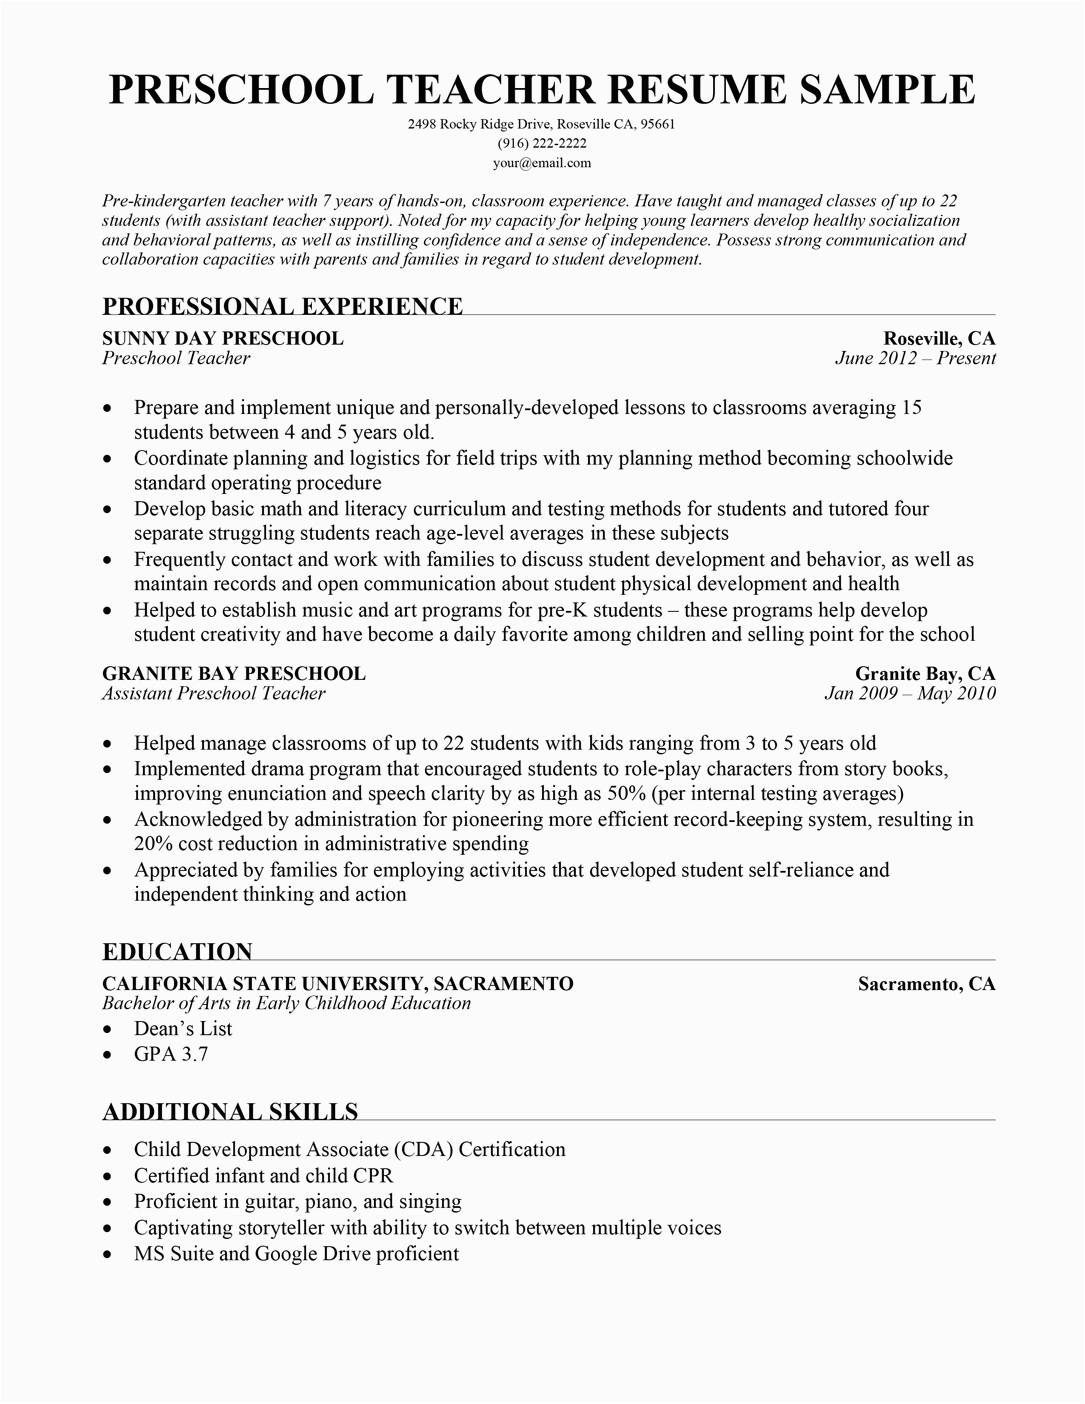 Sample Resume for Nursery School Teacher Preschool Teacher Resume Sample & Writing Tips